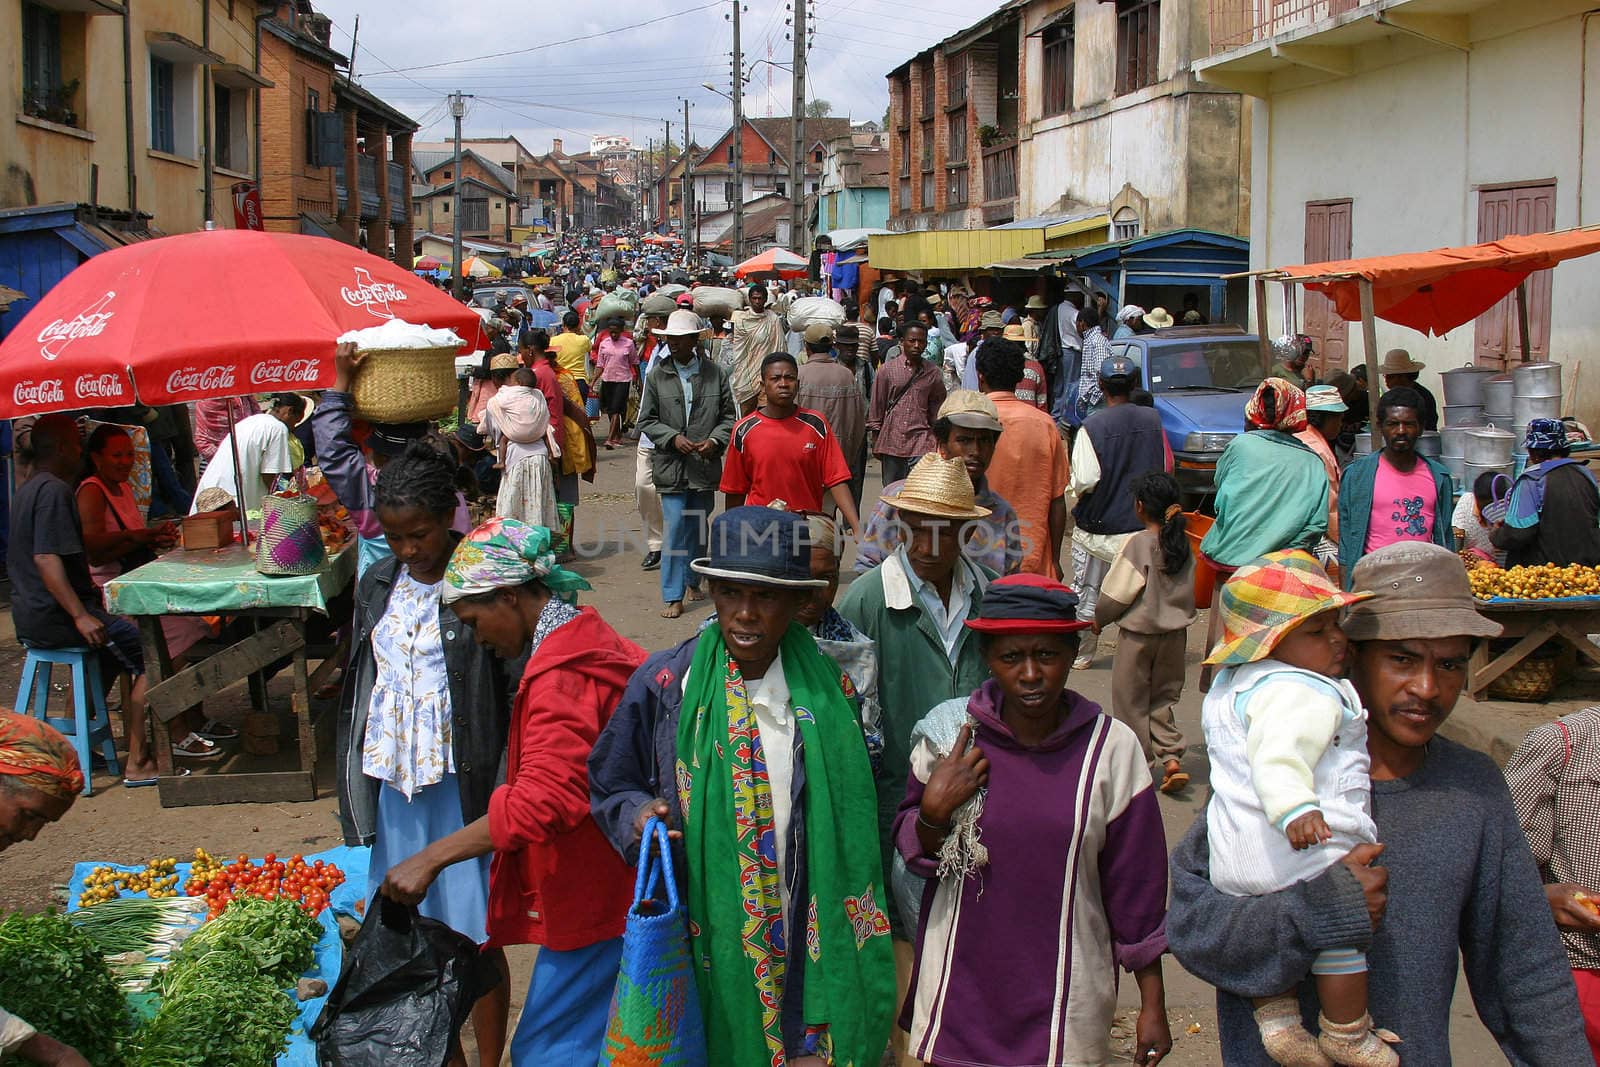 Market scene in a street in Madagascar